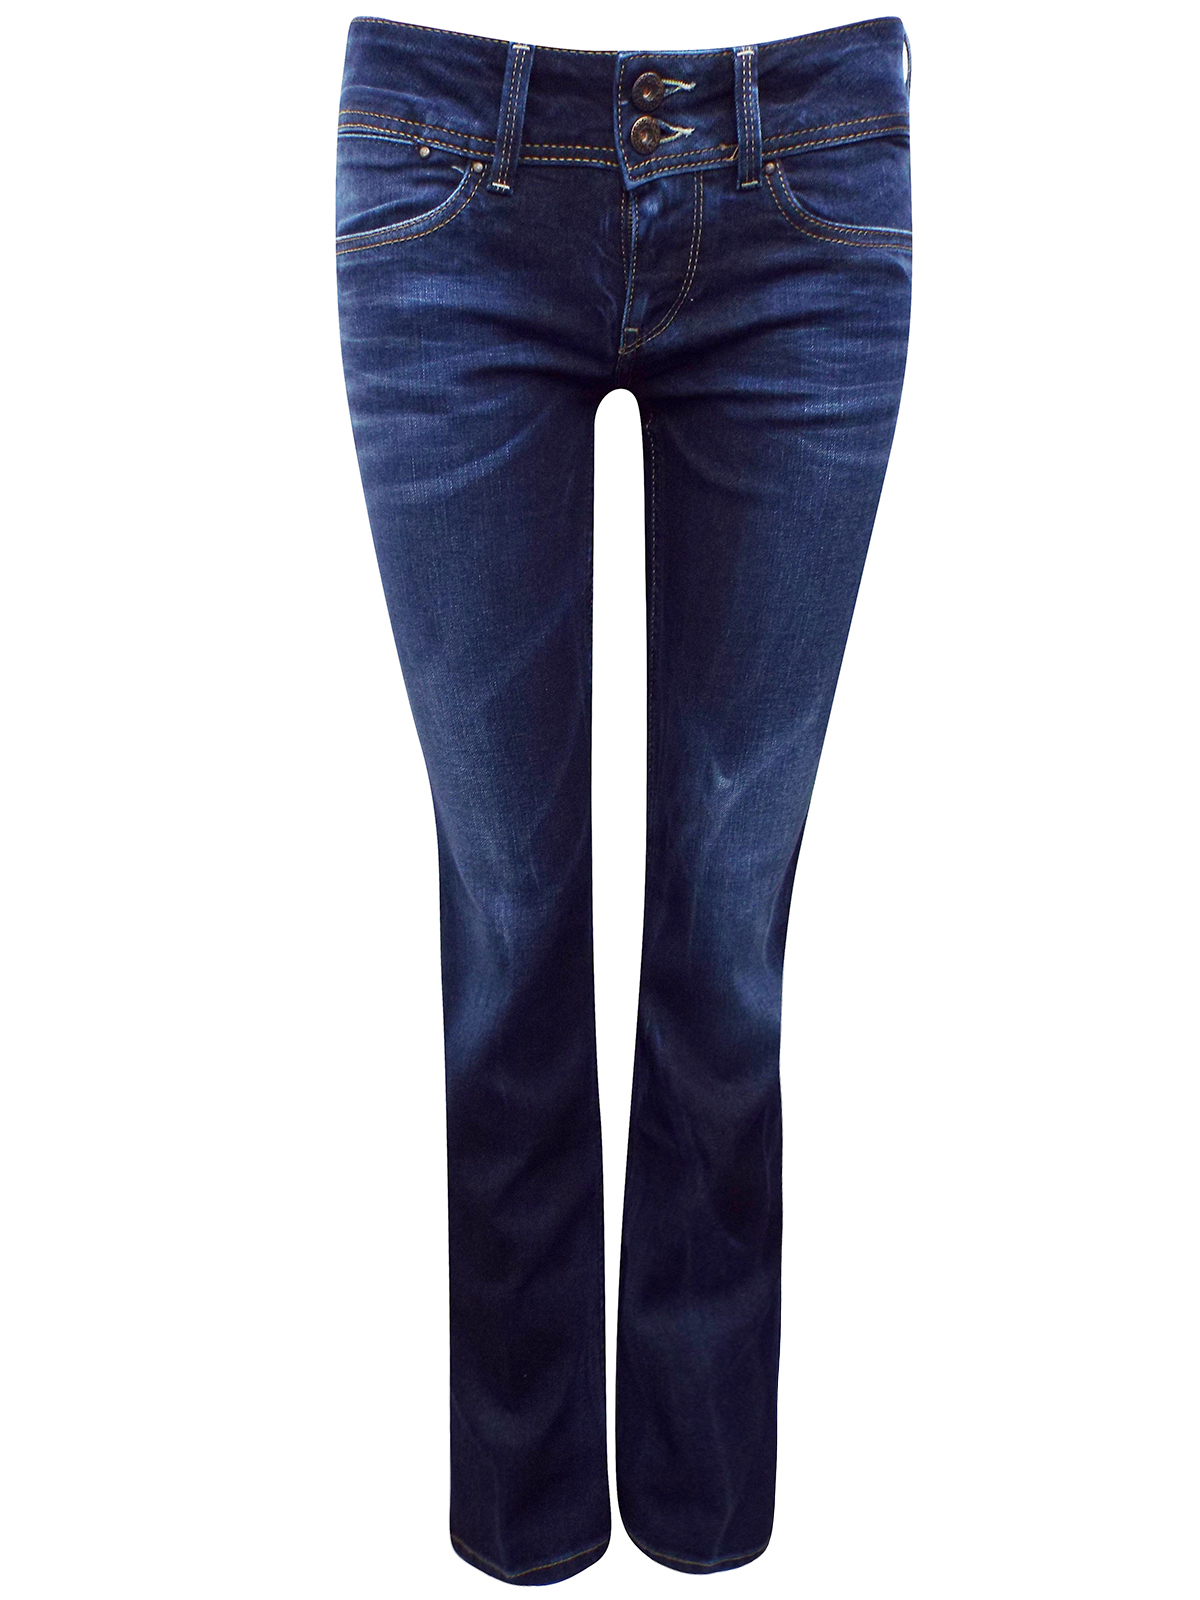 Jeans Donna LEE Norma blu indigo slim fit narrow leg stretch Vintage style